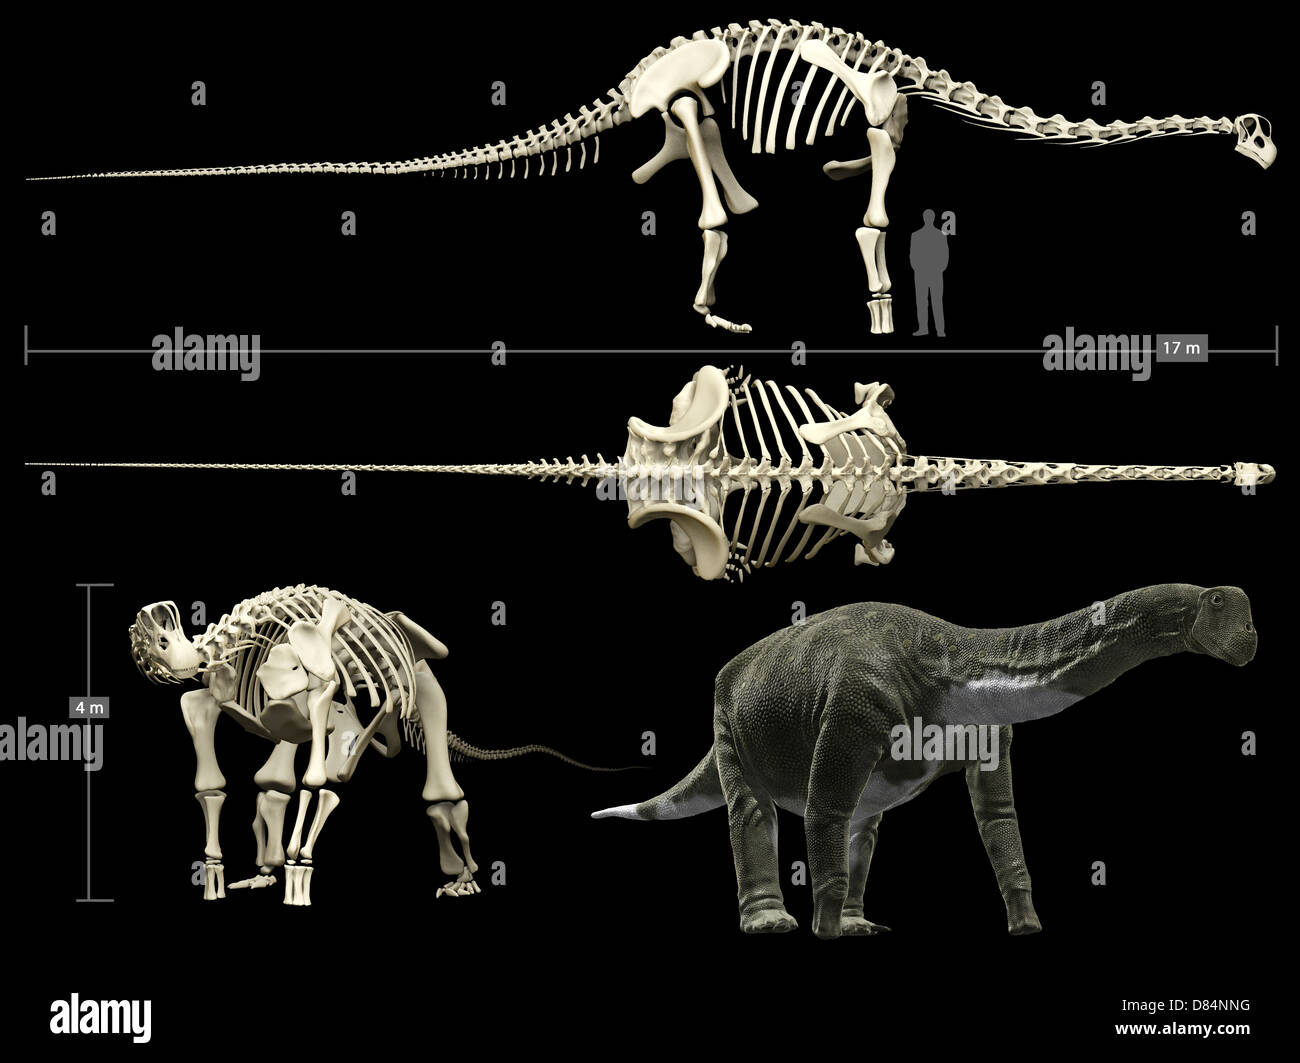 Anatomy of a Titanosaur. Stock Photo